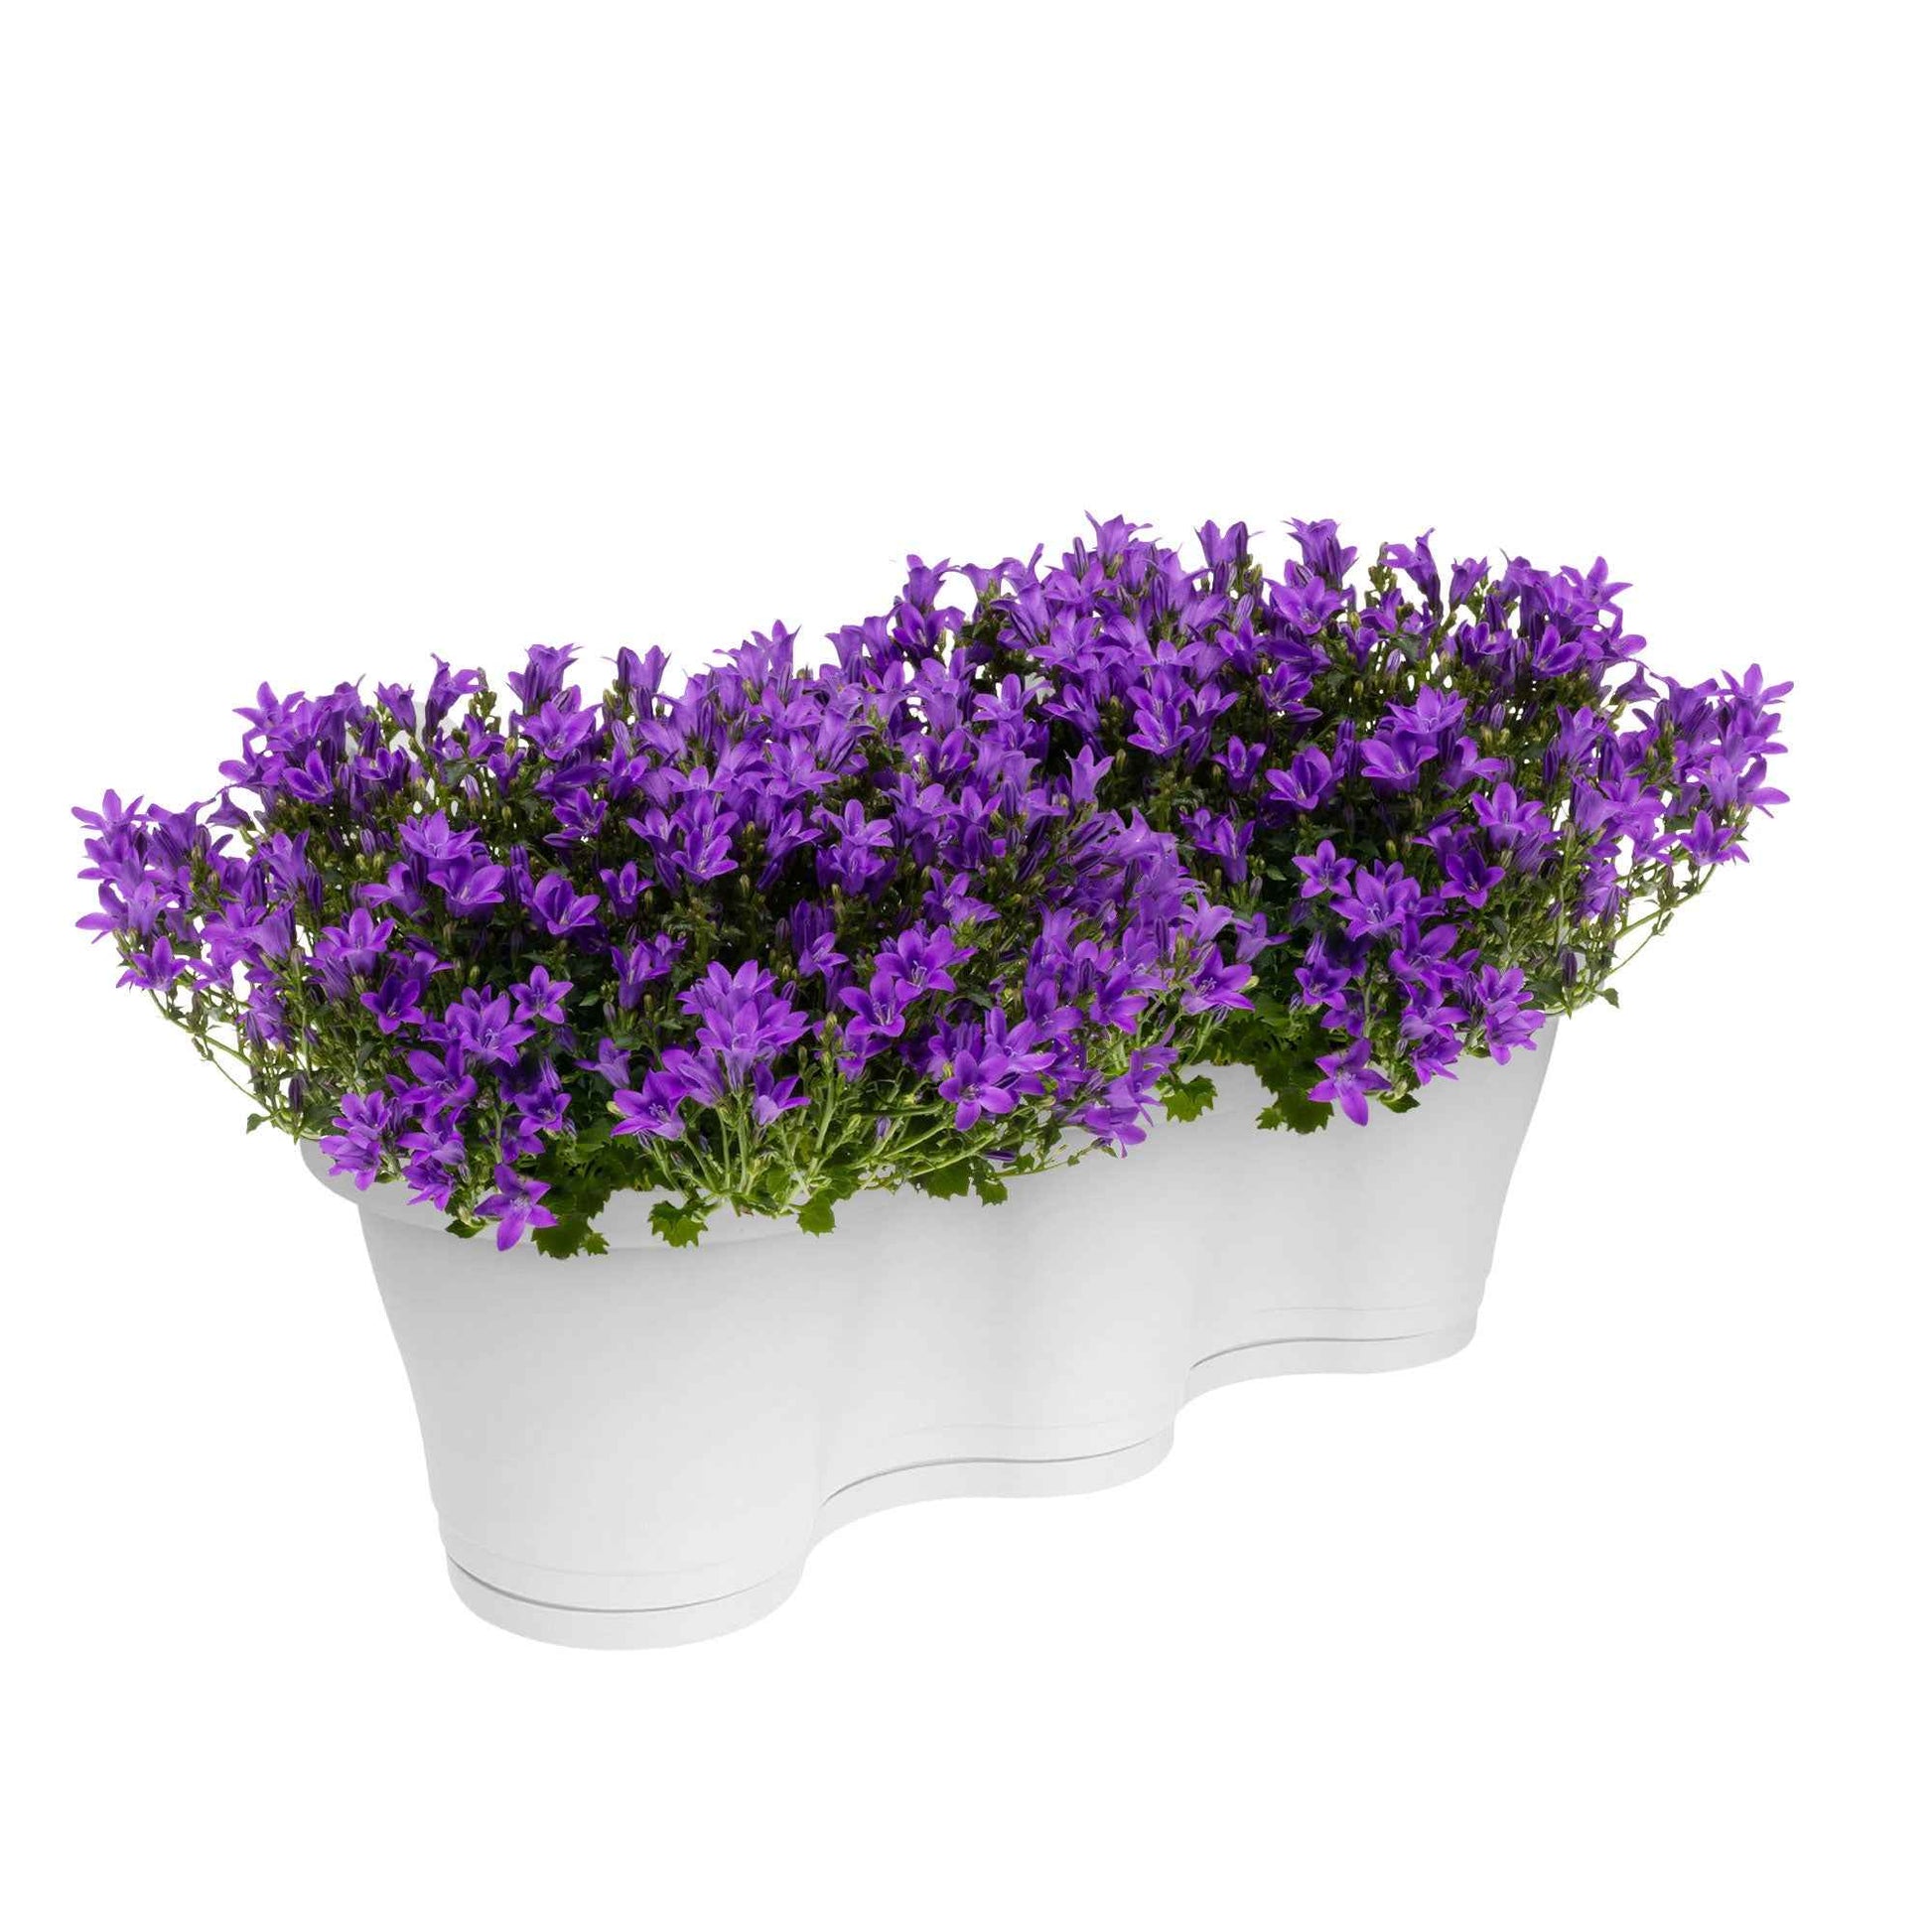 3x Campanule Campanula 'Ambella Intense Purple' violet avec jardinière blanc - Campanule en pot décoratif